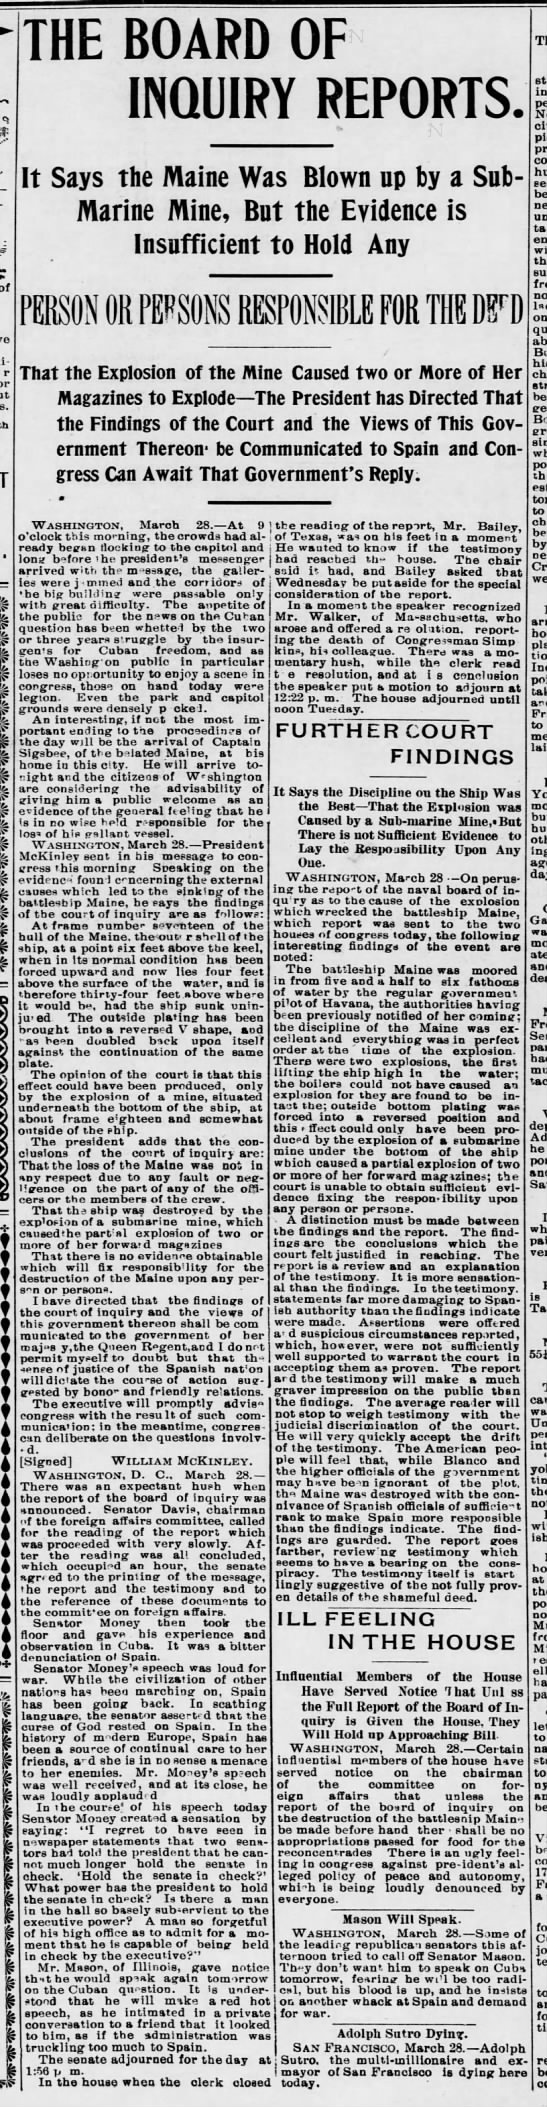 1898 court of inquiry determines Maine explosion was caused by underwater mine - 